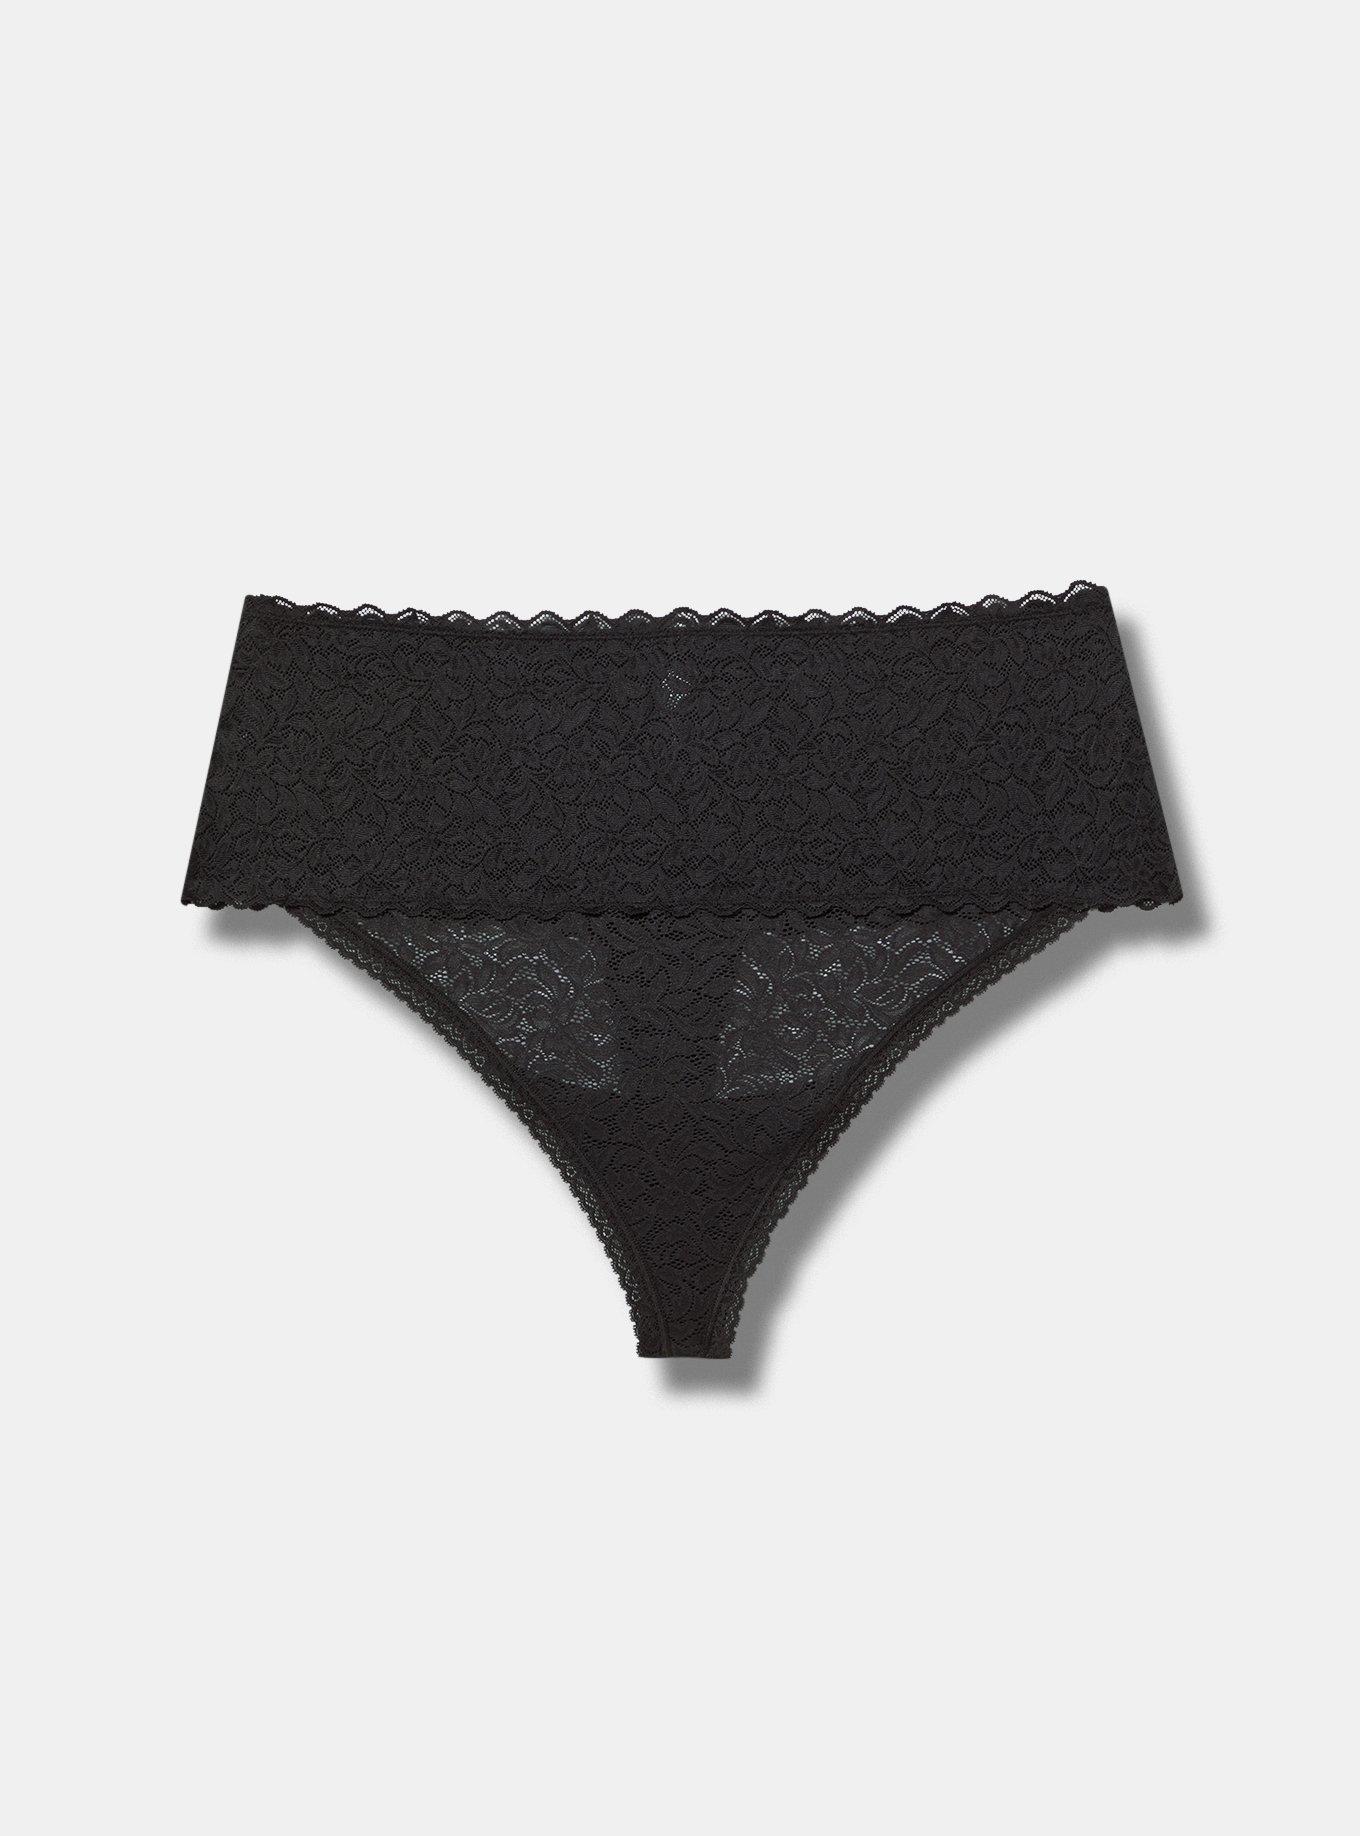 Torrid Silky Black G-string Panty with Black Lace Trim Plus Size